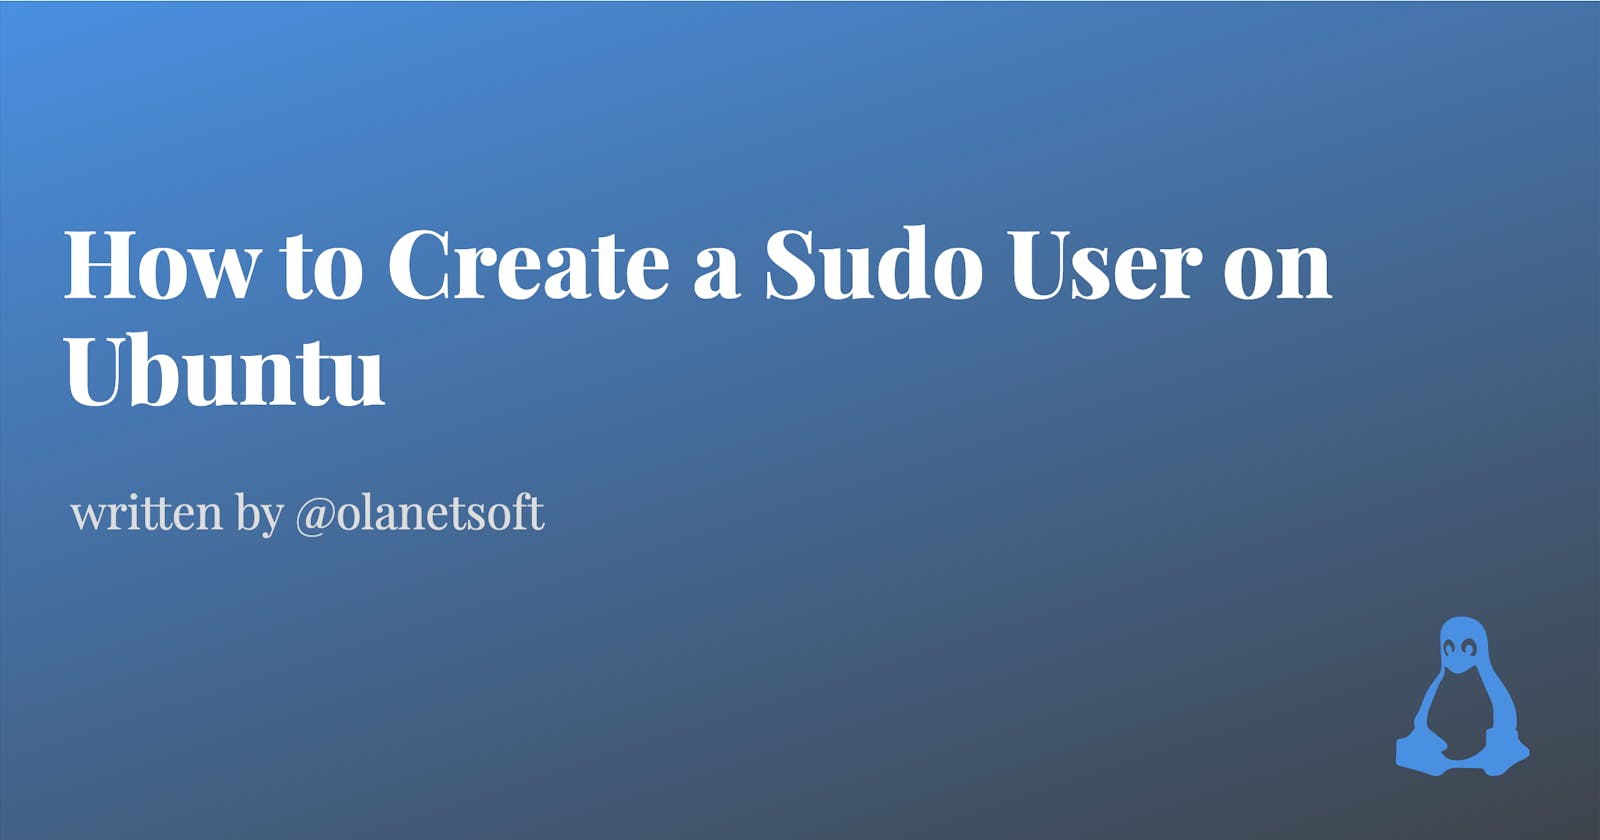 How to Create a Sudo User on Ubuntu